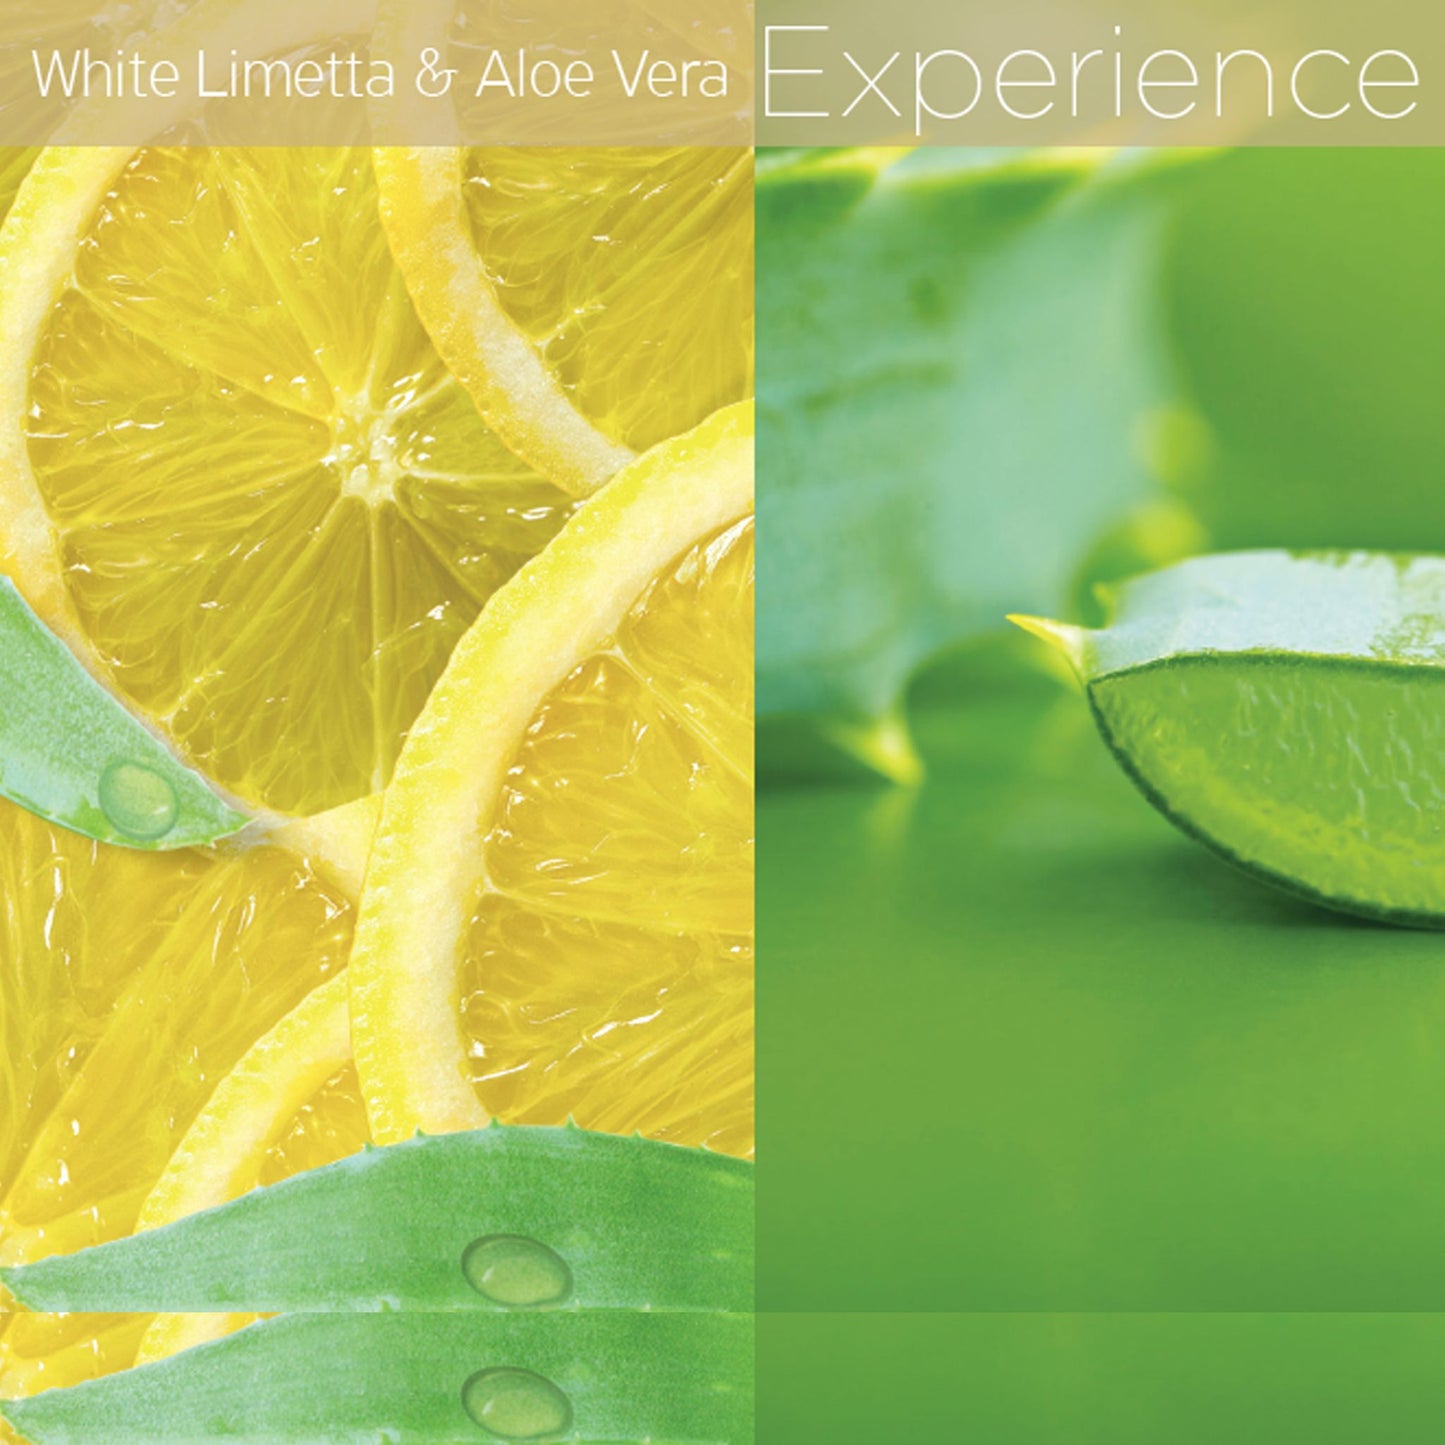 Daily Skin Polisher Micro Exfoliant, White Limetta & Aloe Vera